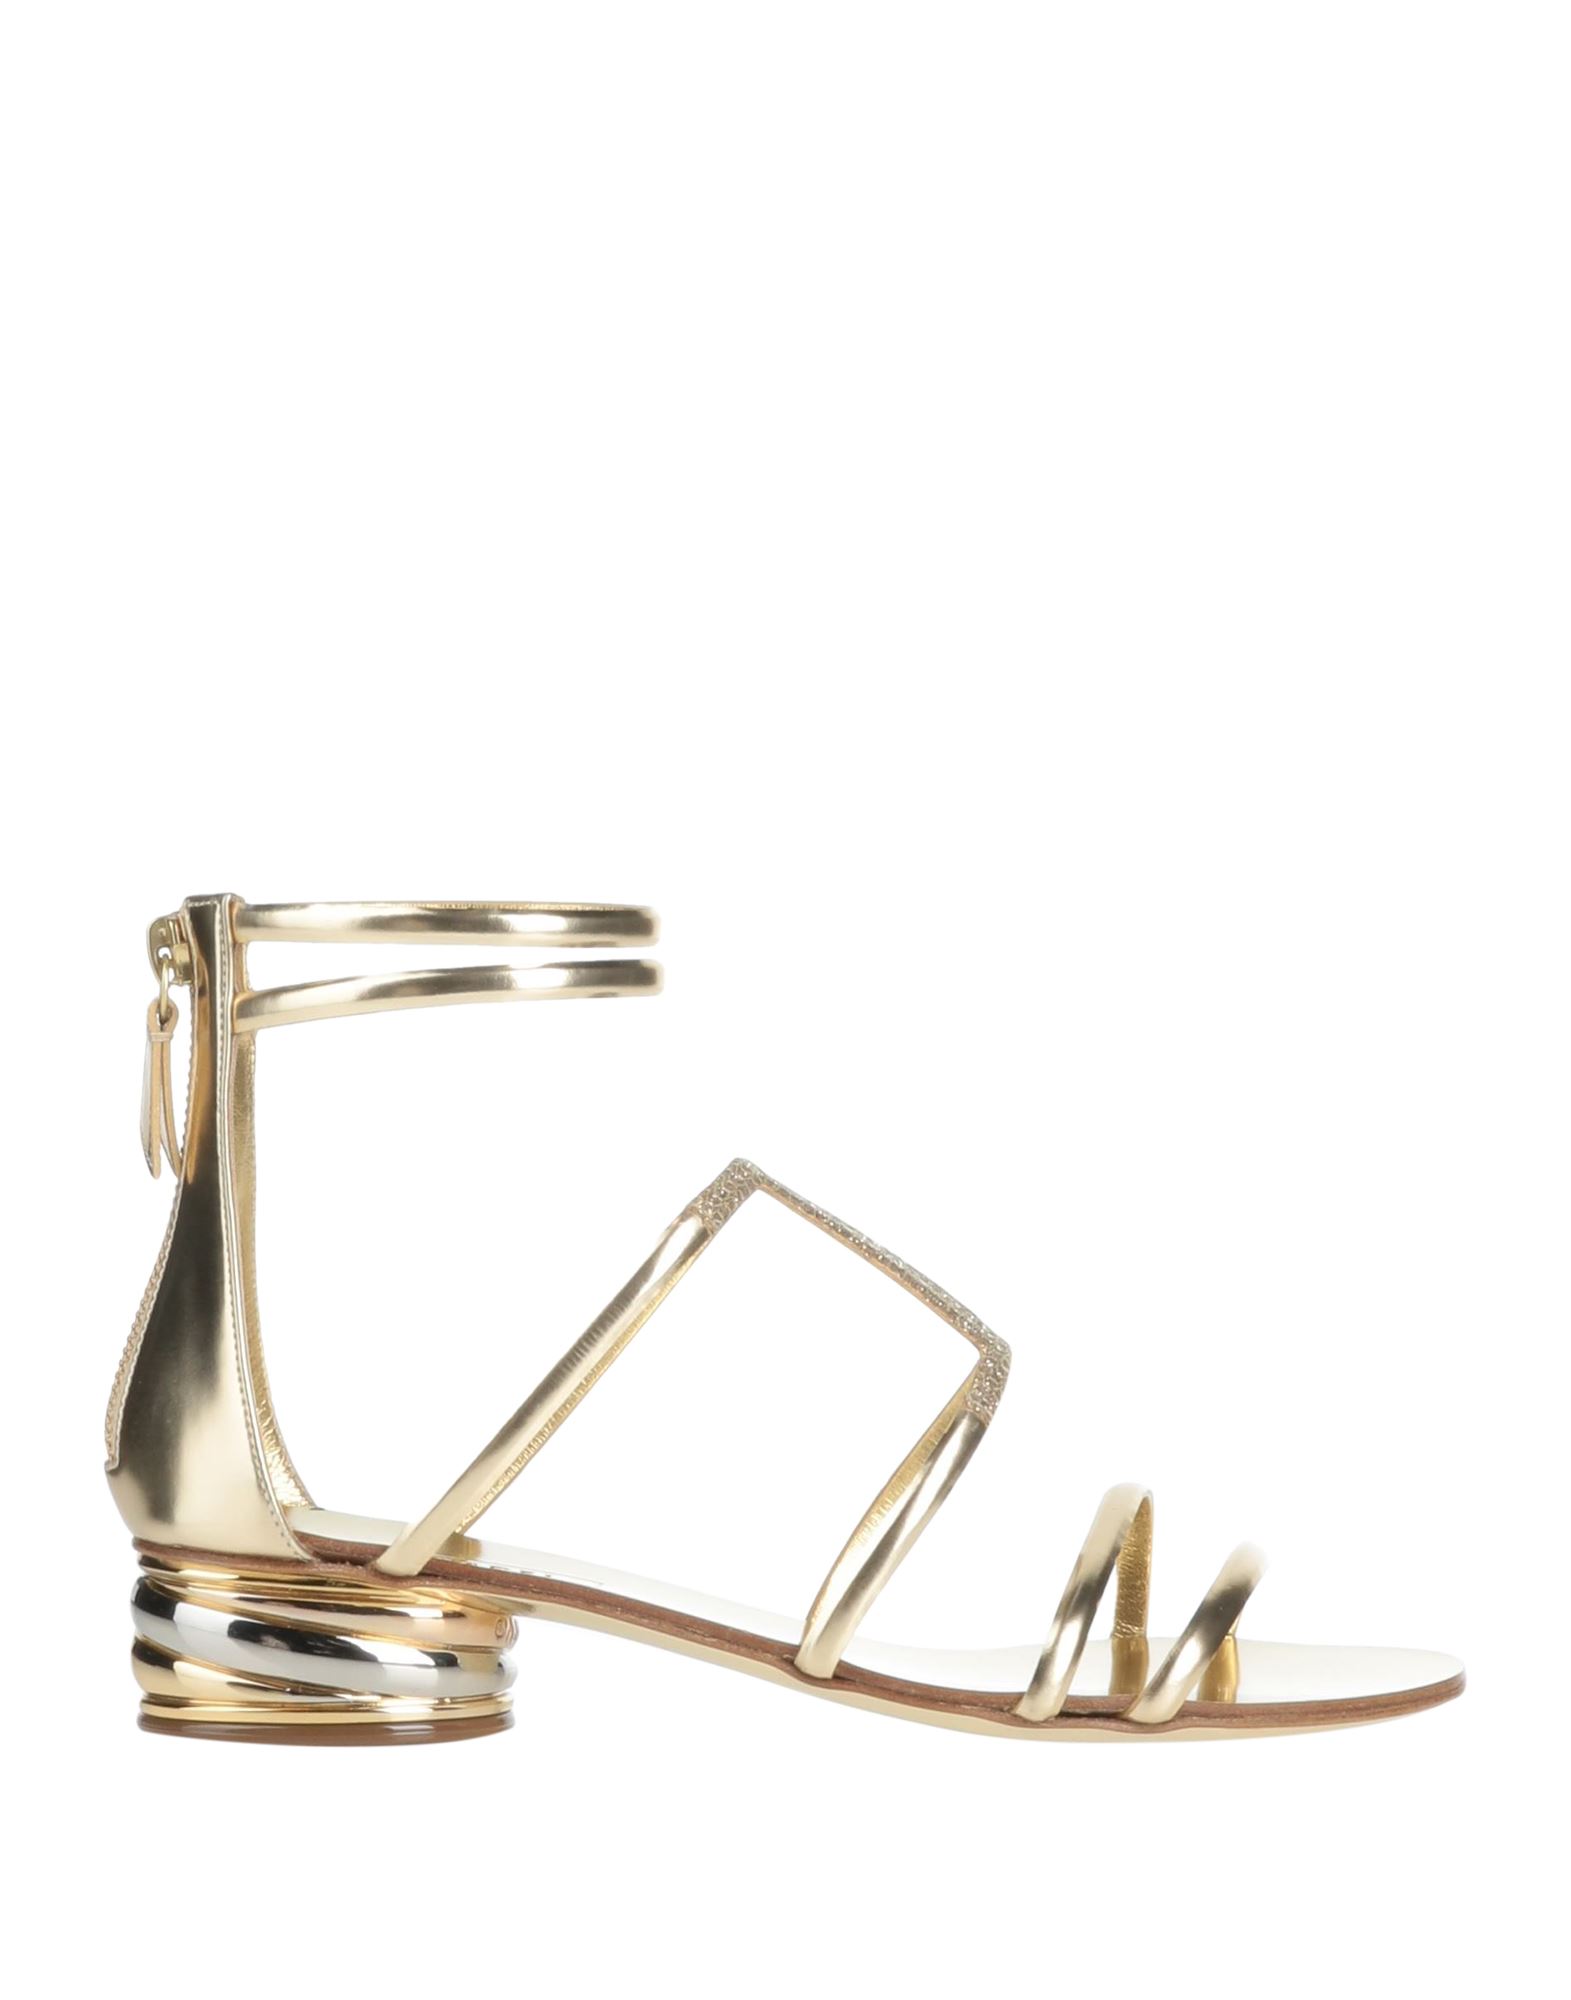 Casadei Sandals In Gold